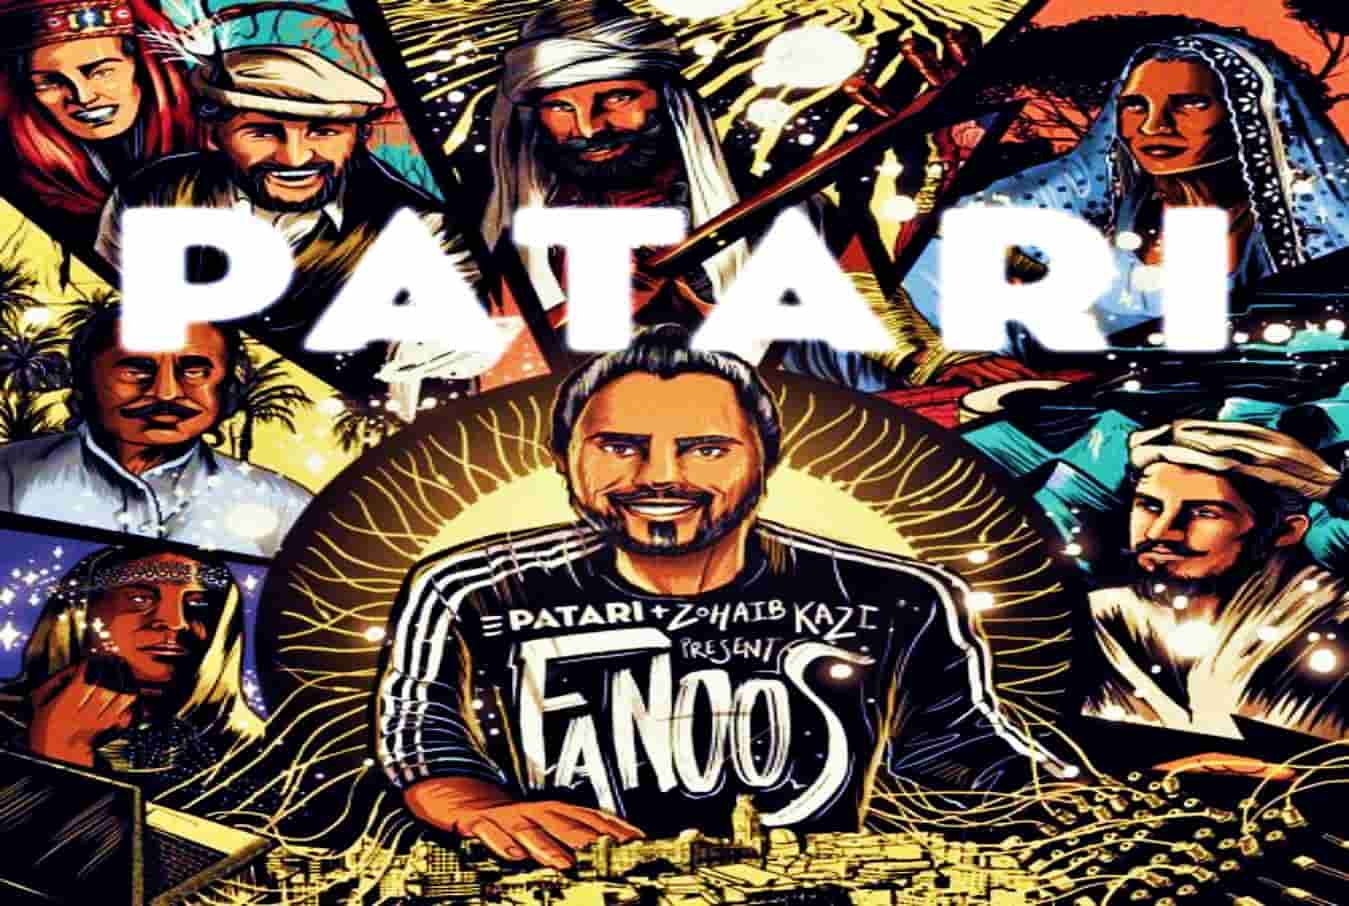 Hackers leak 260,000 accounts from Pakistani music streaming site Patari